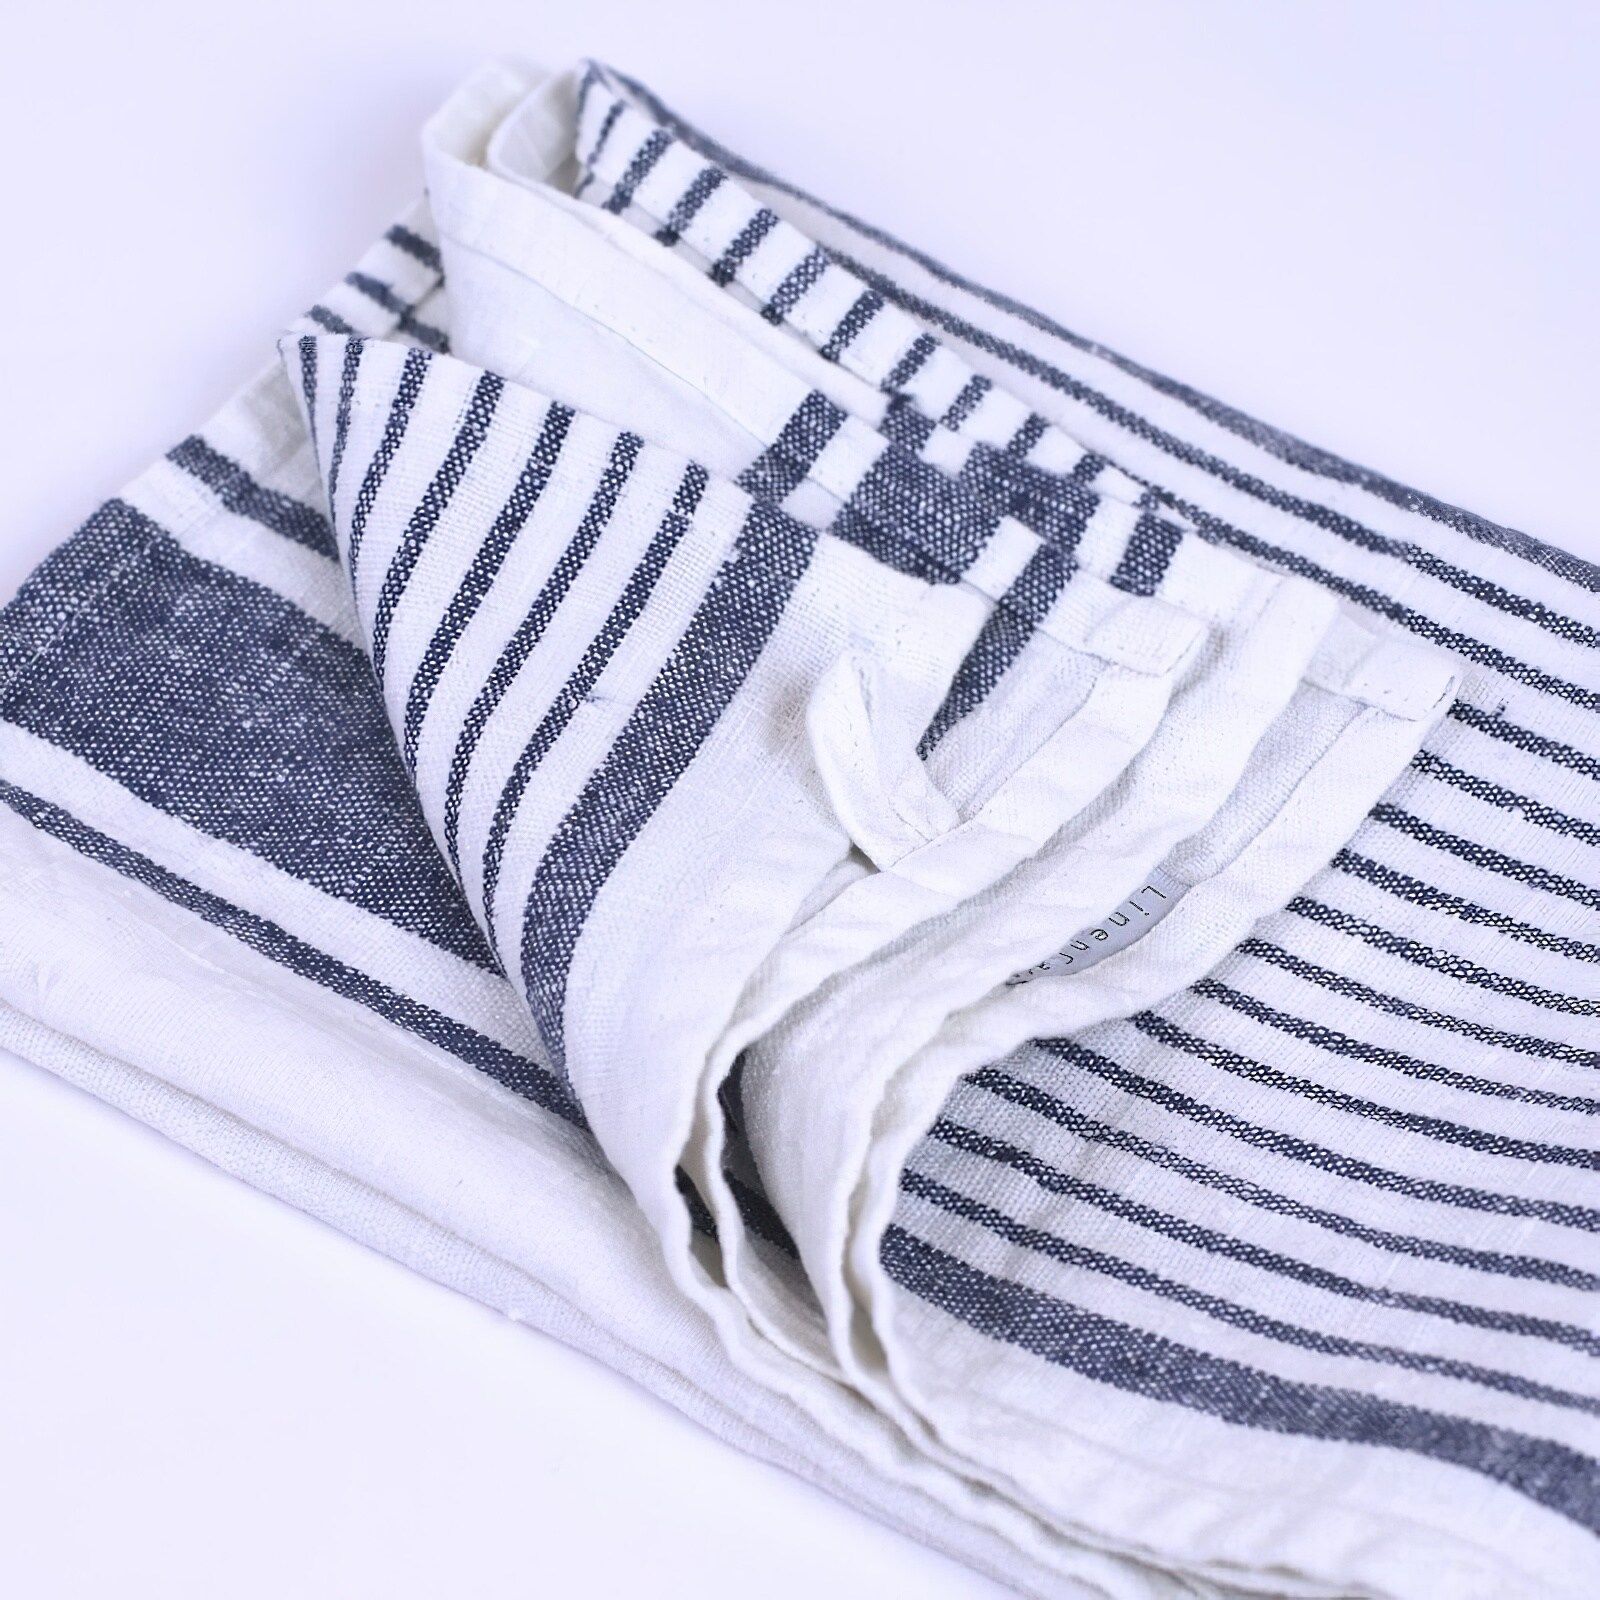 LinenCasa Linen Bath Towel - Luxury Thick Stonewashed - Blue with Stripes